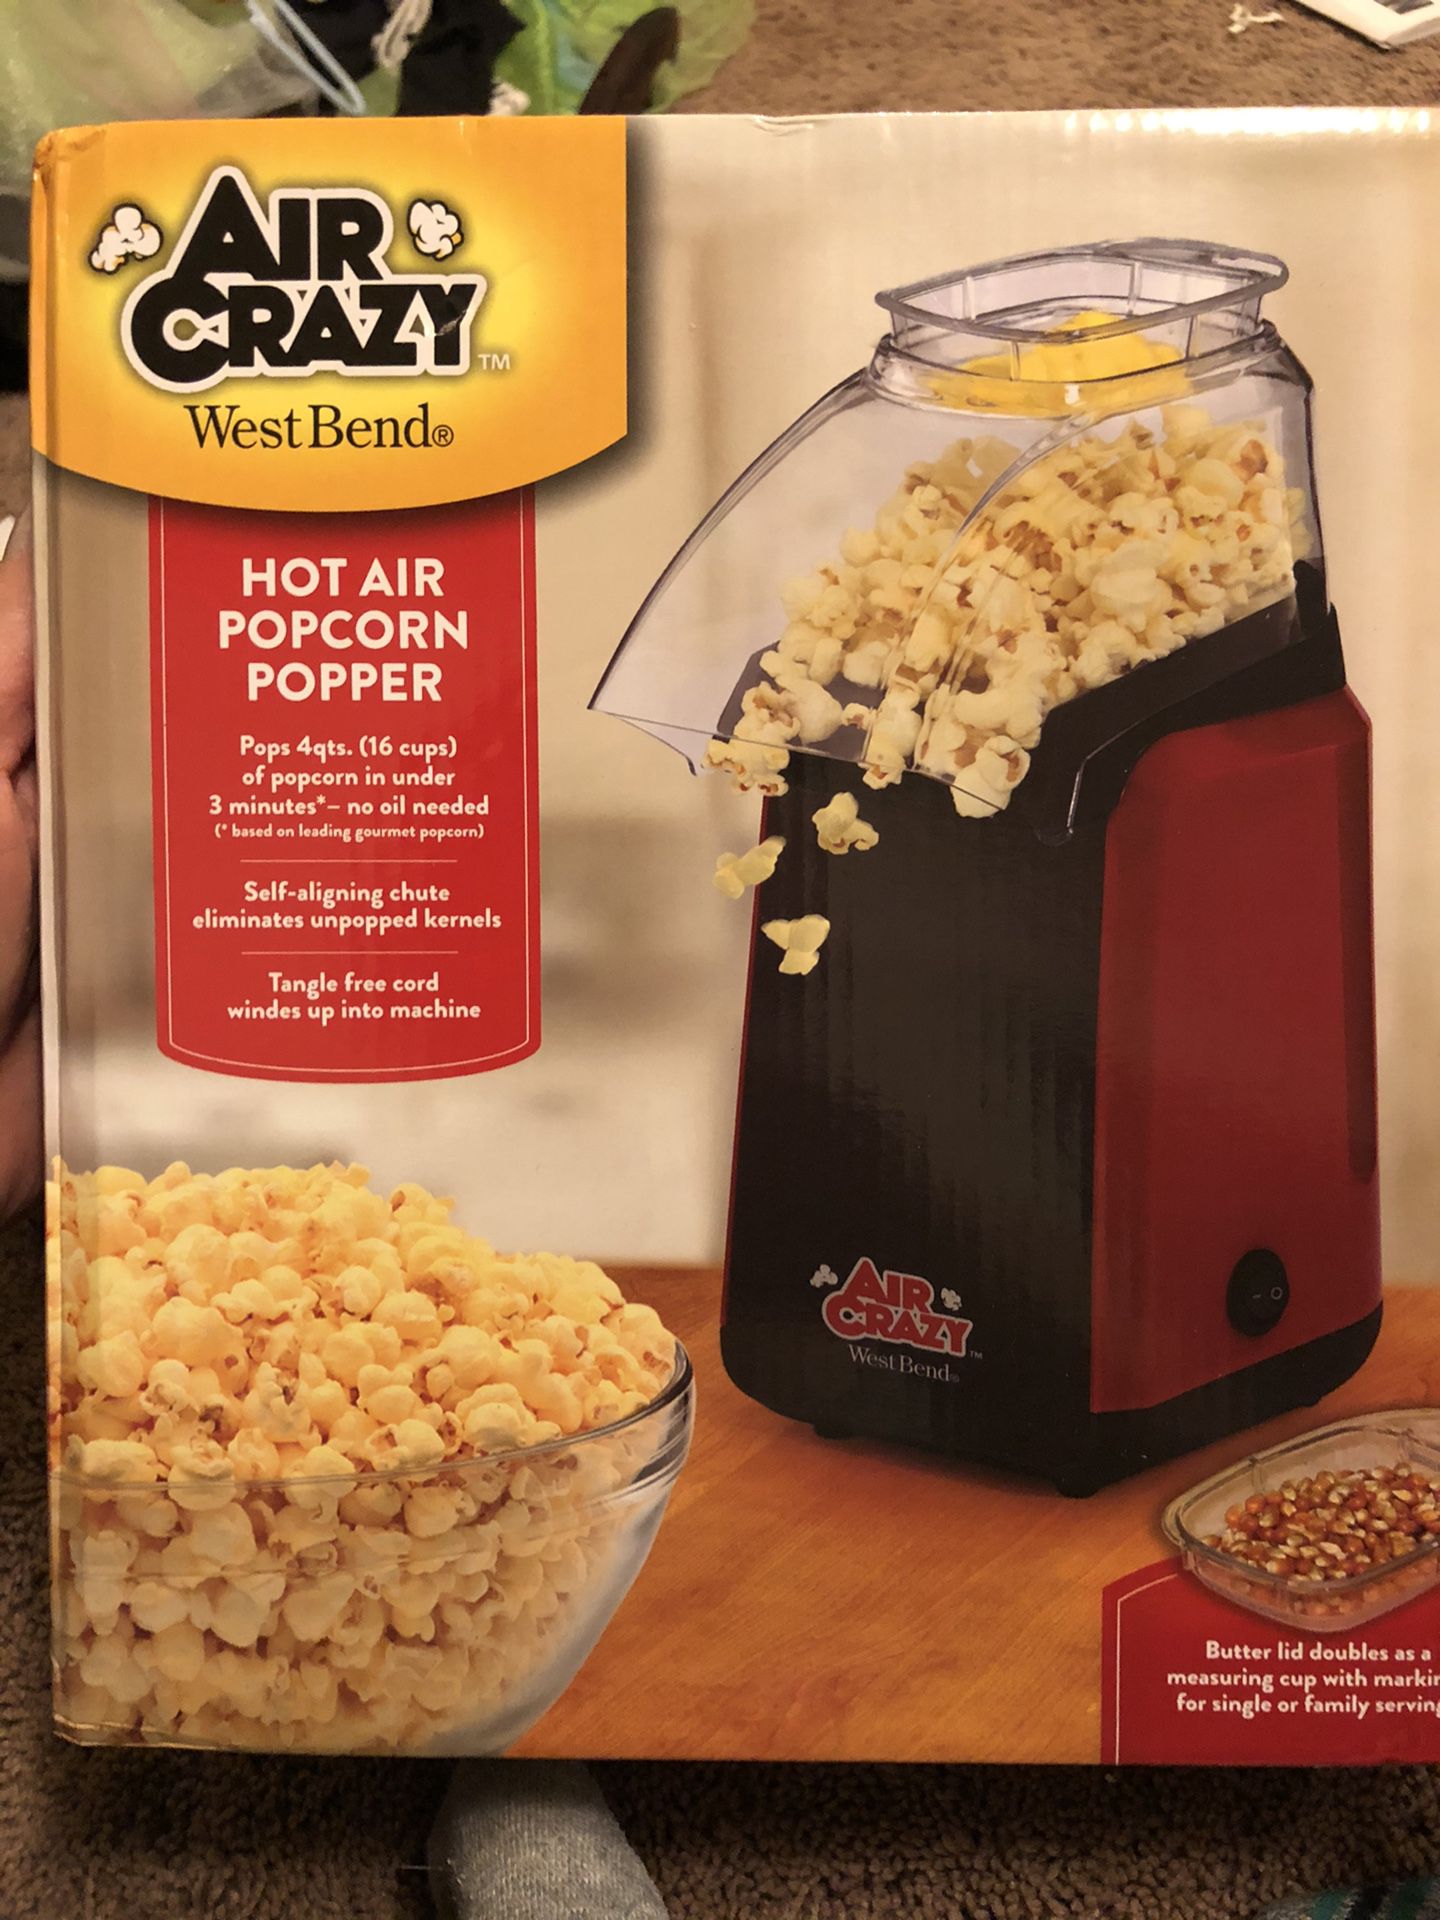 Popcorn popper